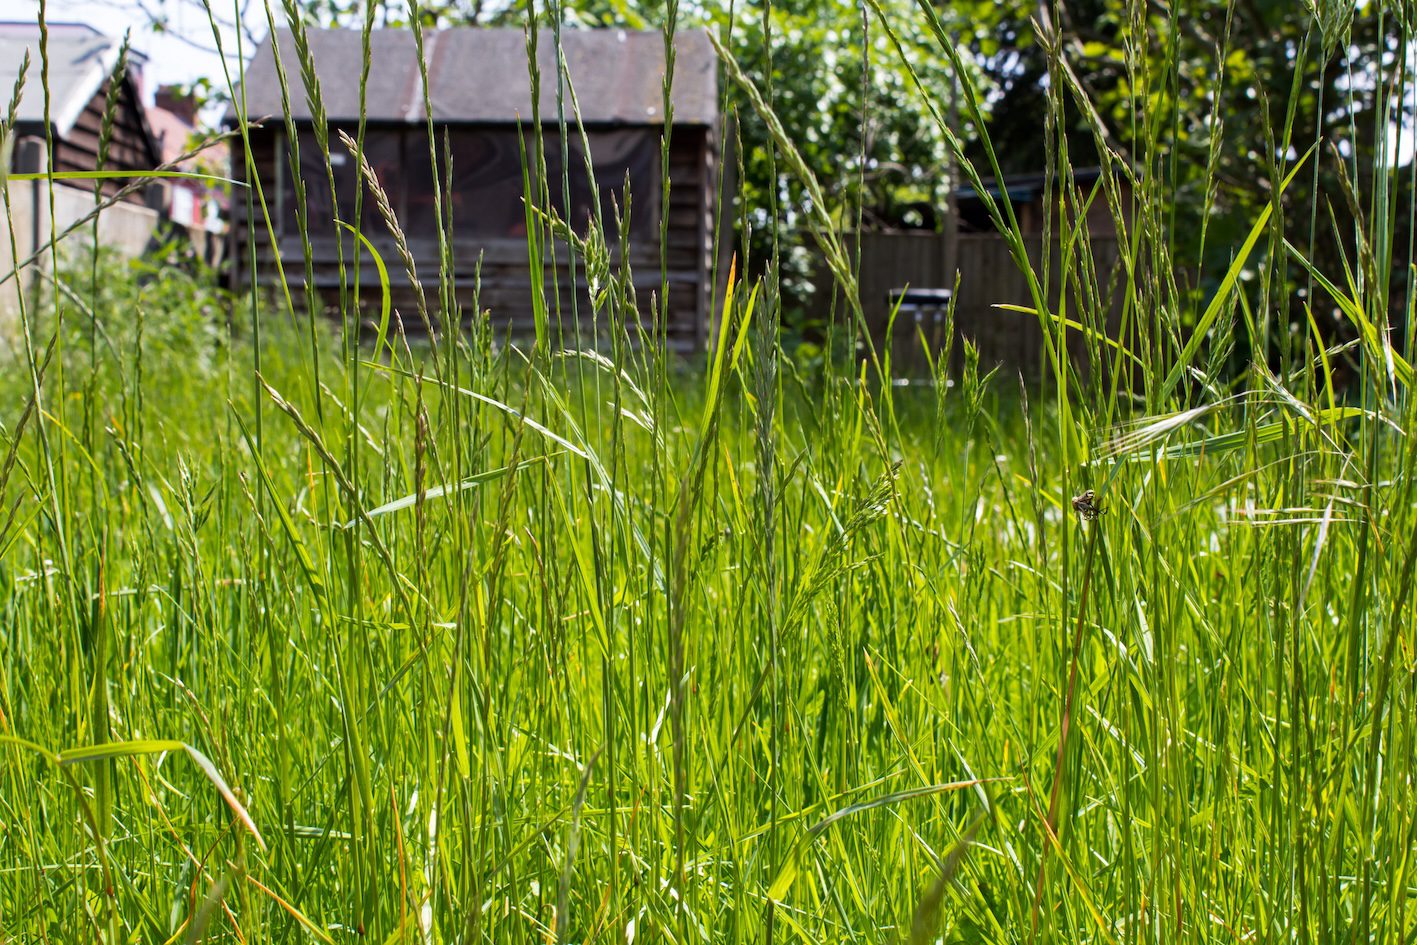 Overgrown grass in a domestic garden